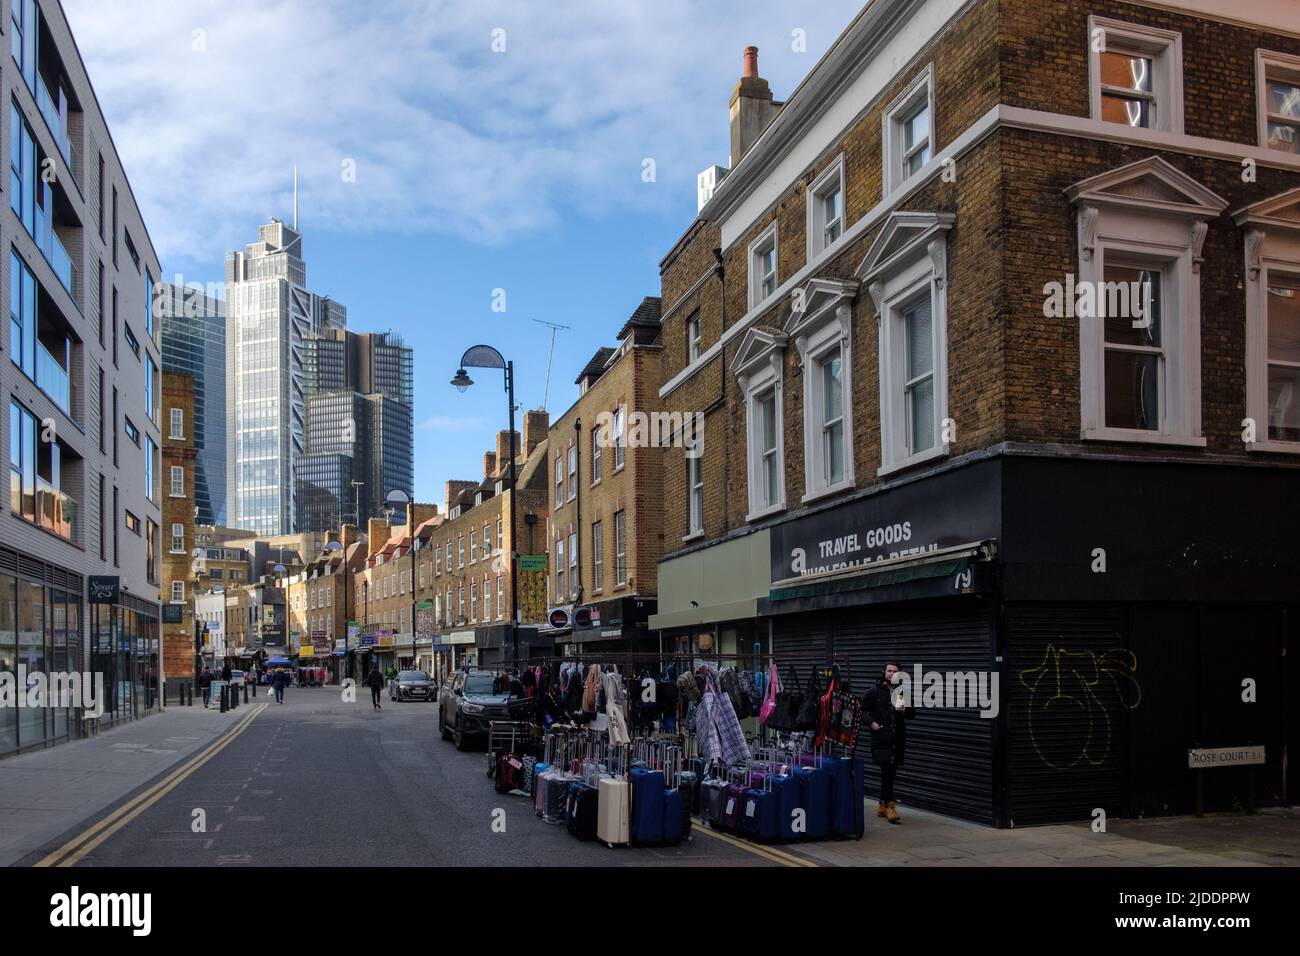 Wentworth Street, Spitalfields, the modern home of Petticoat Lane Market, on a non-market day. City of London backdrop. Stock Photo